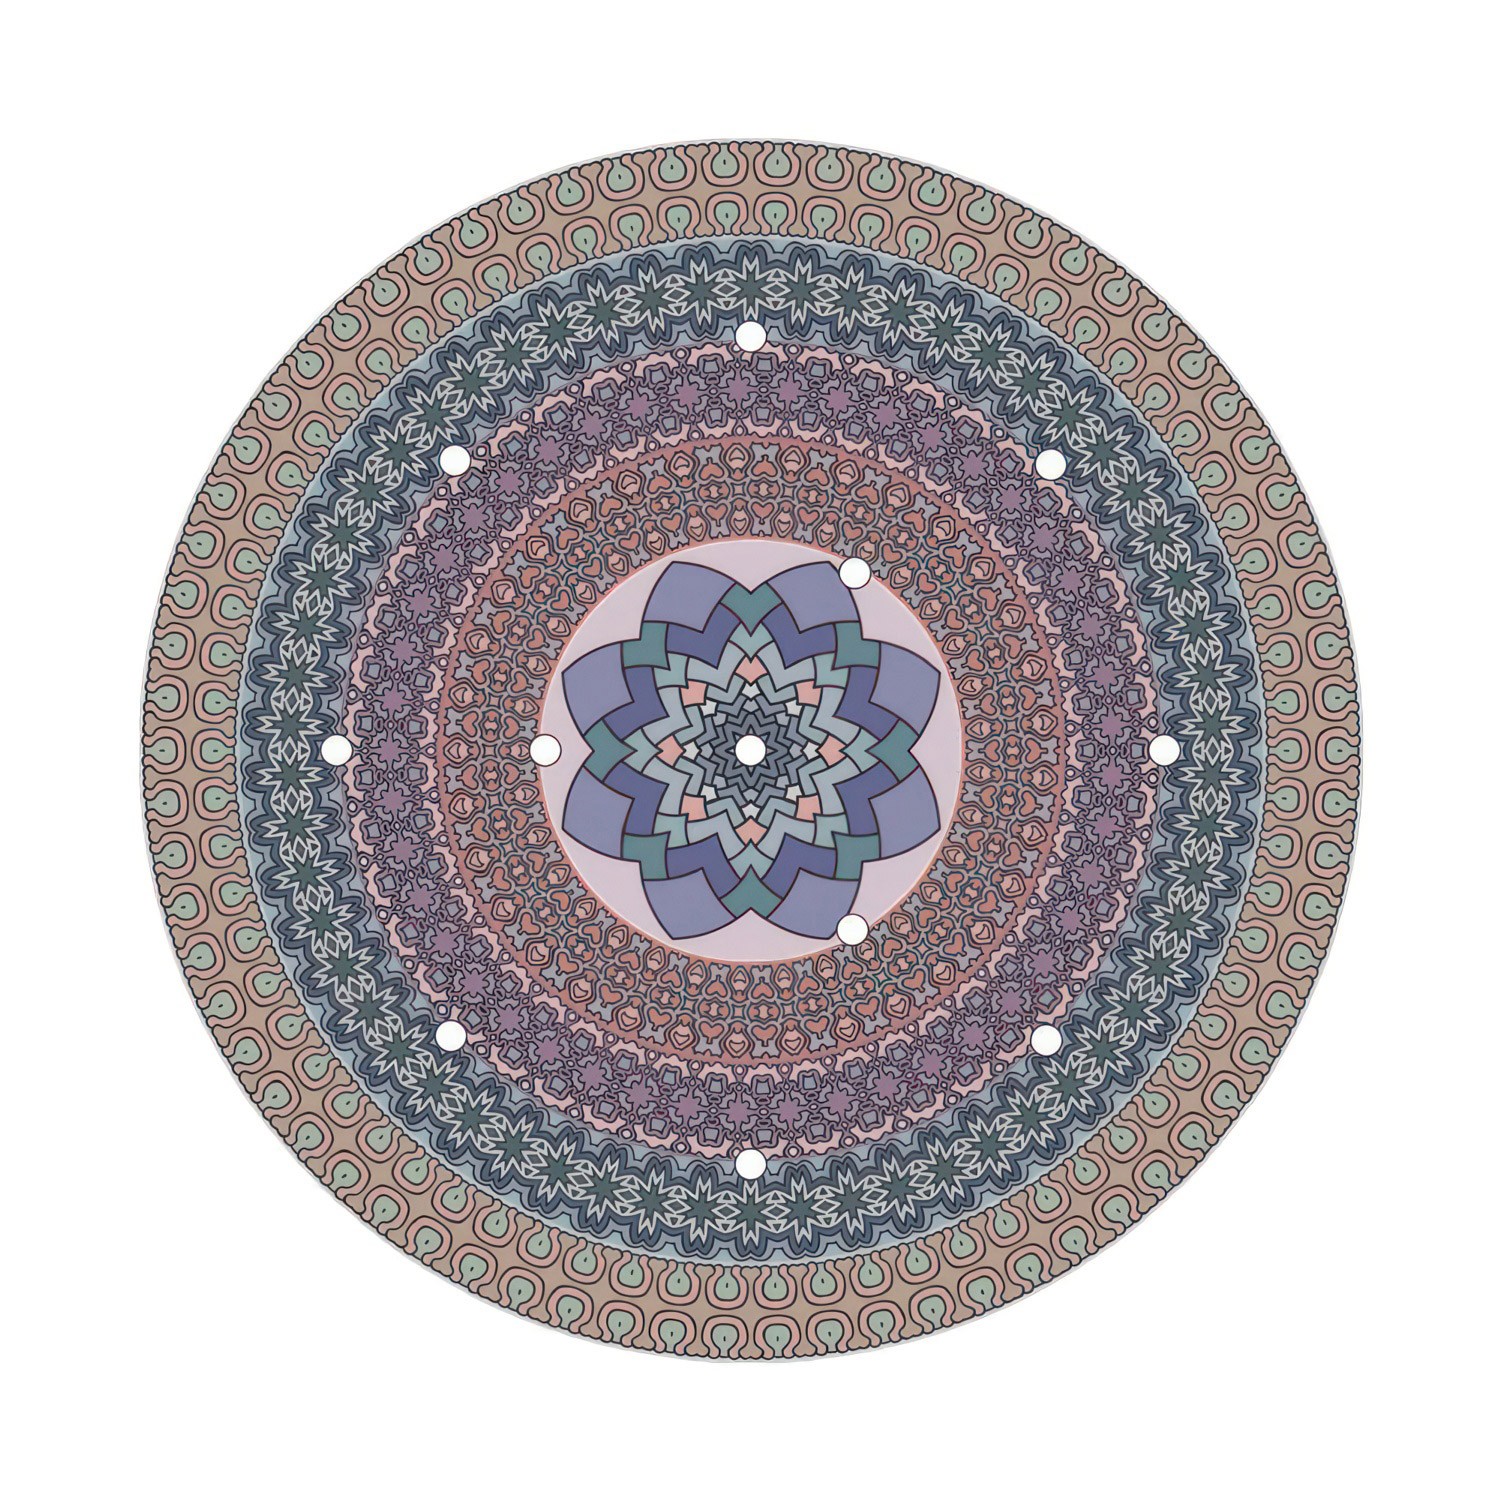 Velika okrugla dekoracija za stropnu rozetu 400 mm - Rose-One sistem s 12 rupa i 4 bočne rupe - PROMO